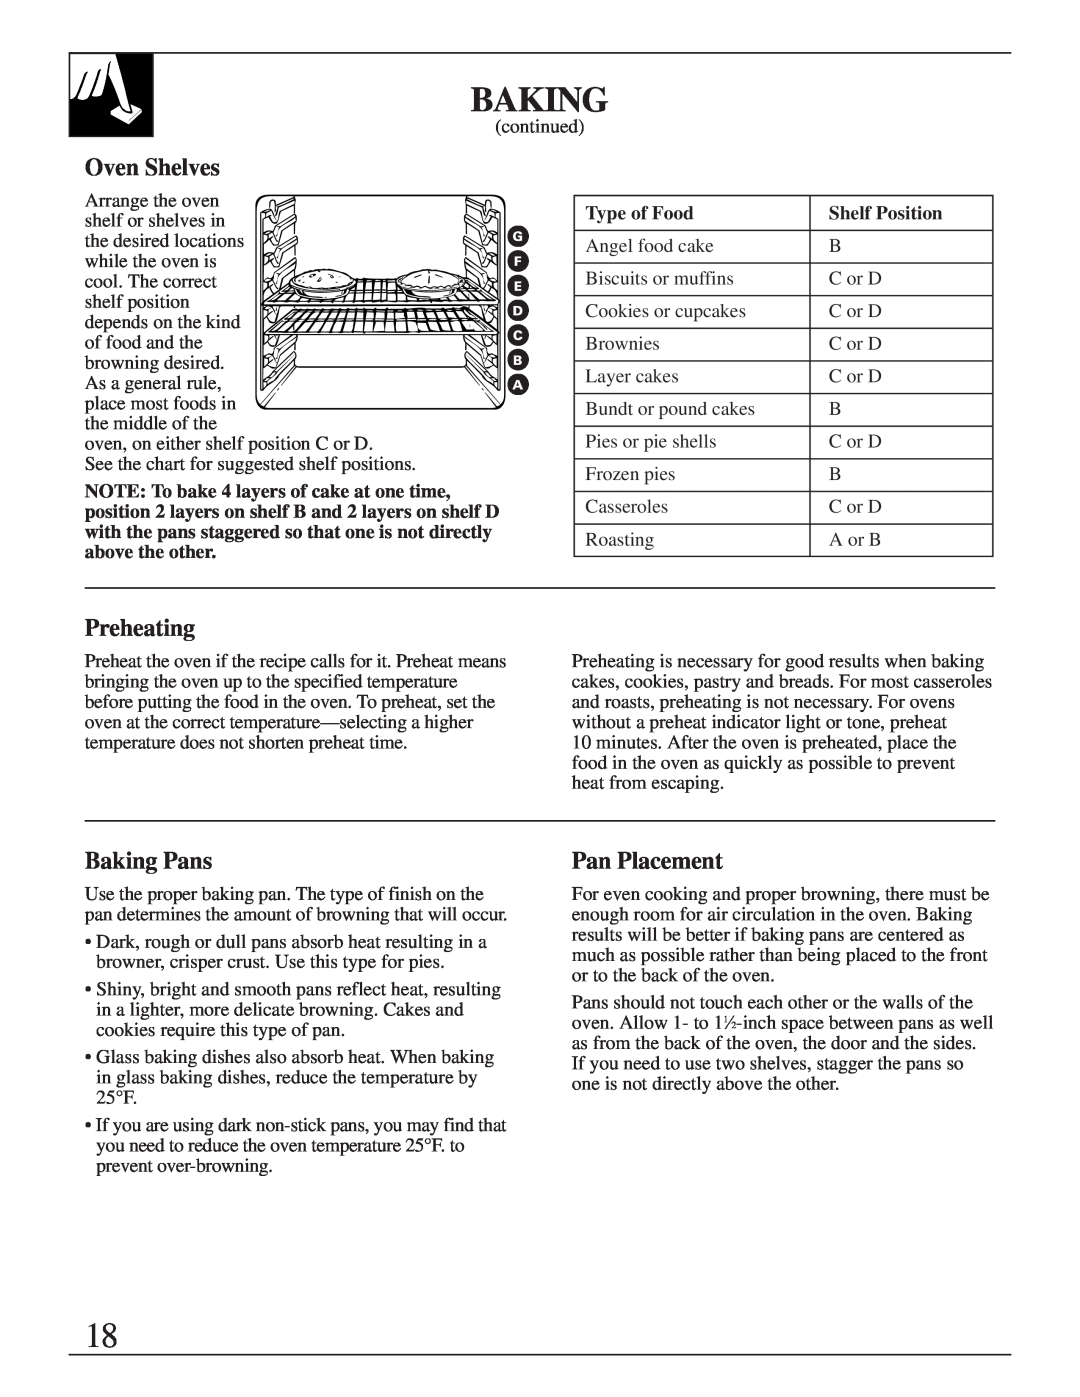 GE 164D2966P205-1 manual Preheating, Baking Pans, Pan Placement, Oven Shelves 